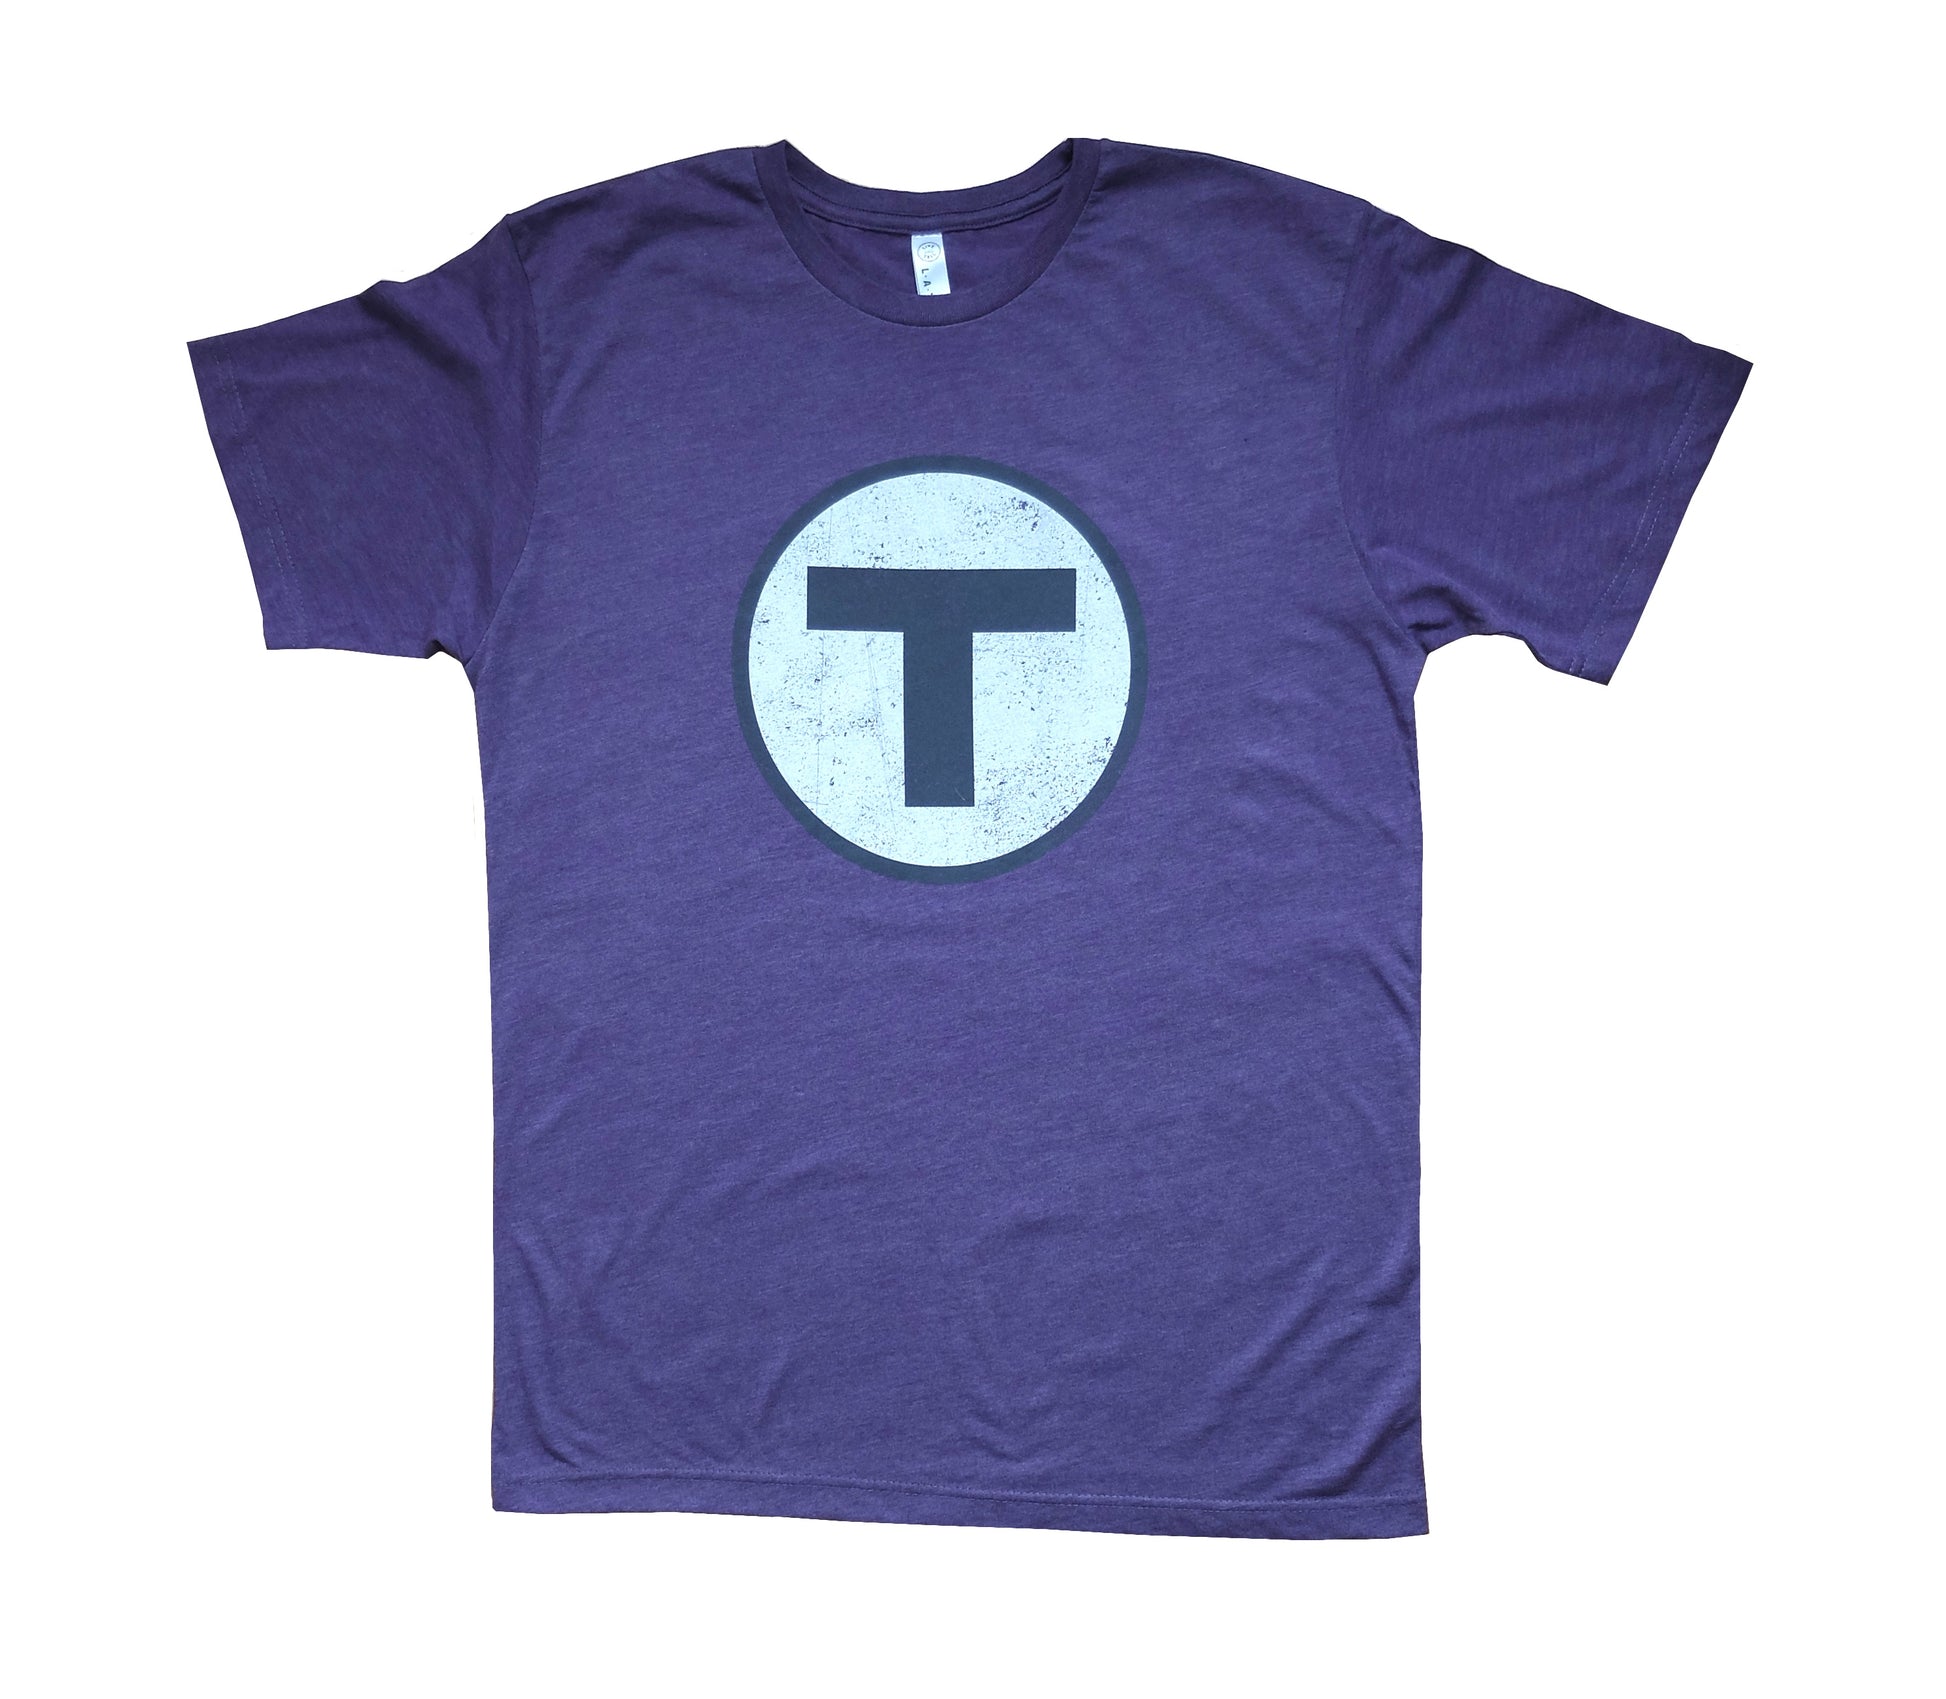 Purple T-Shirt with White & Black MBTA "T" Logo